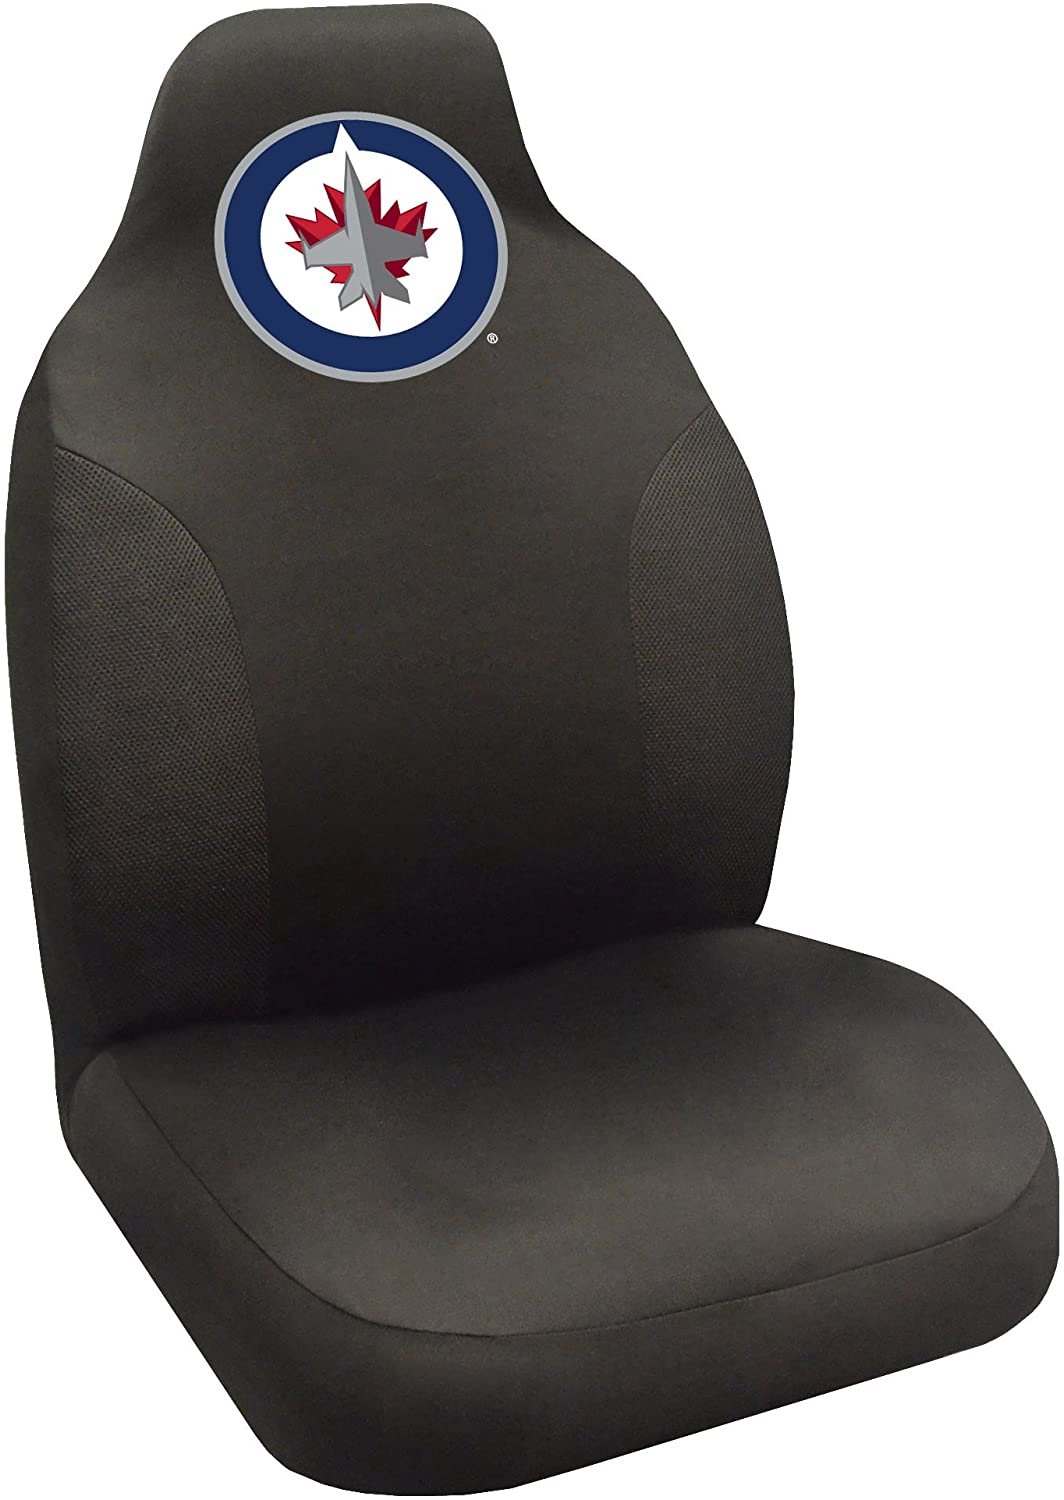 Winnipeg Jets Premium Embroidered Black Auto Bucket Seat Cover 48x20 Inch Elastic